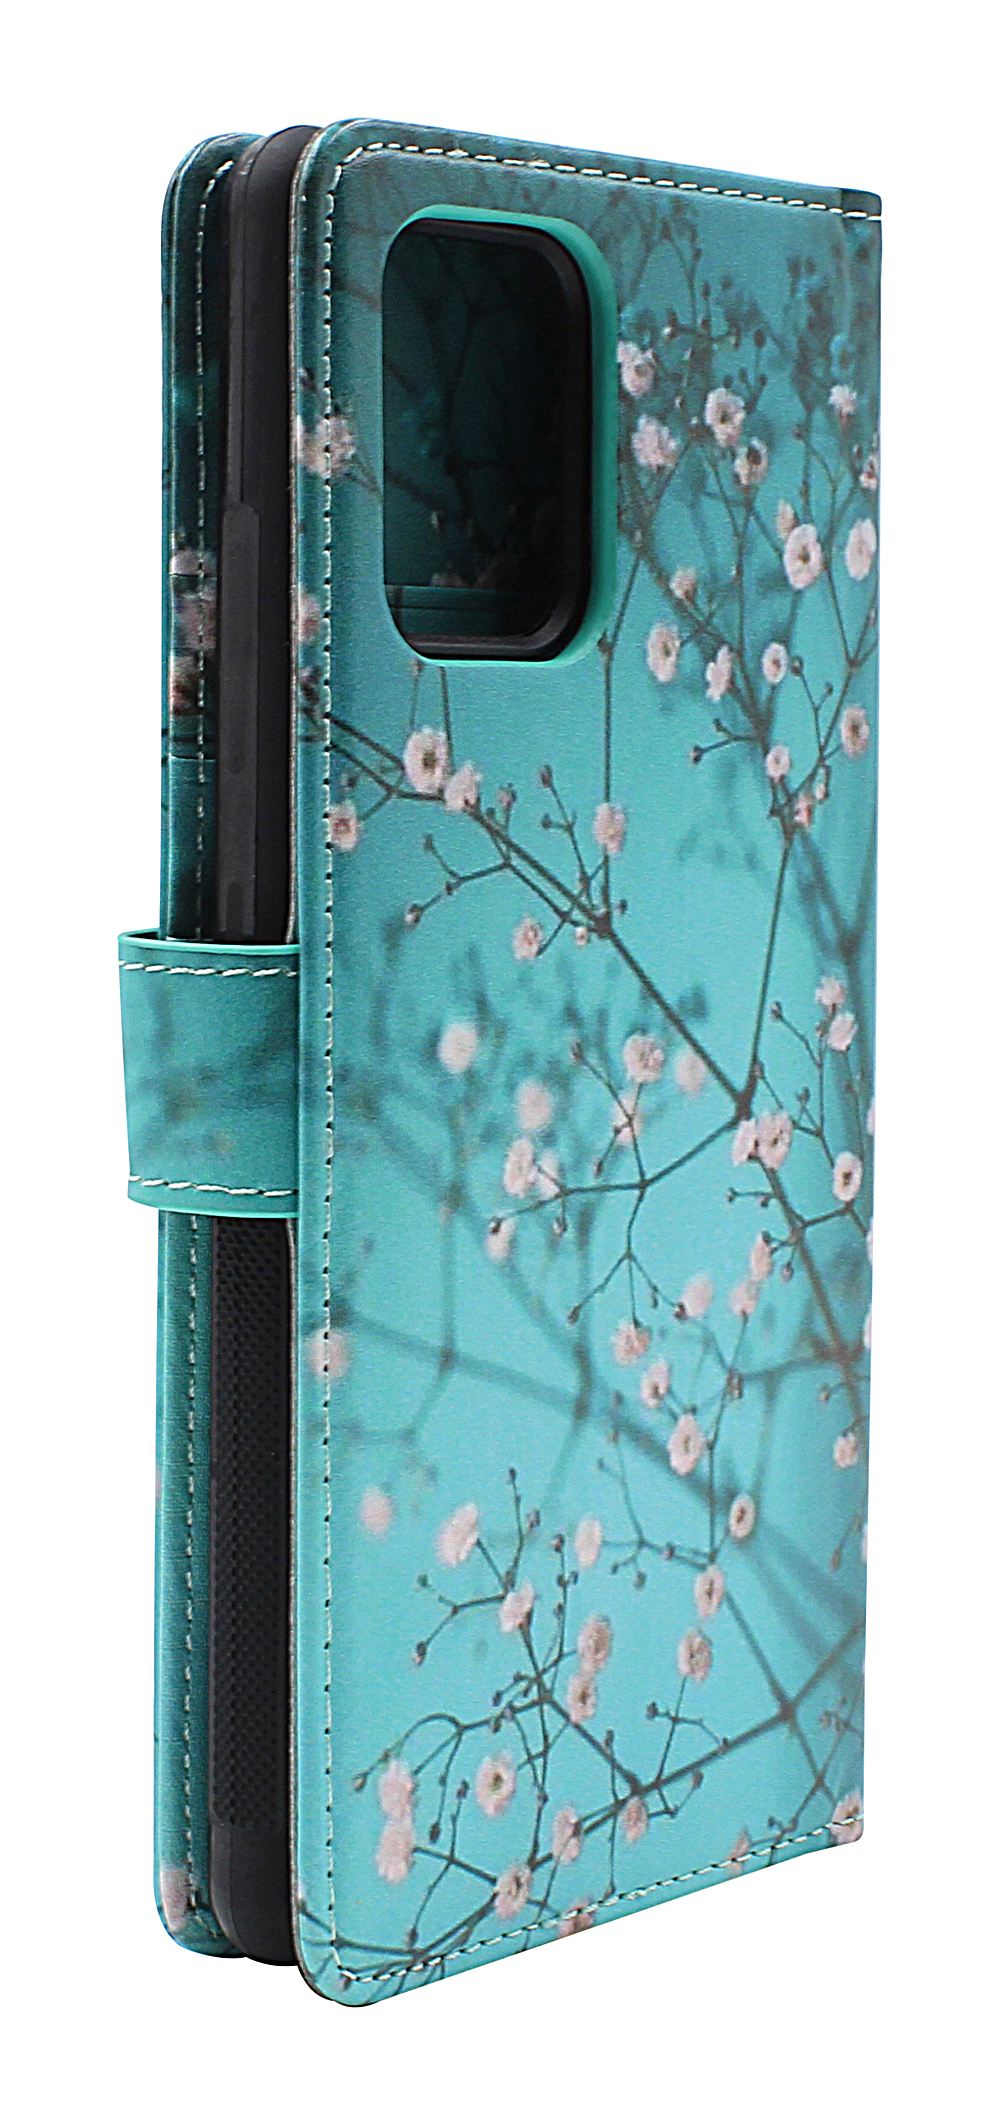 CoverInSkimblocker Magnet Designwallet Samsung Galaxy S10 Lite (G770F)